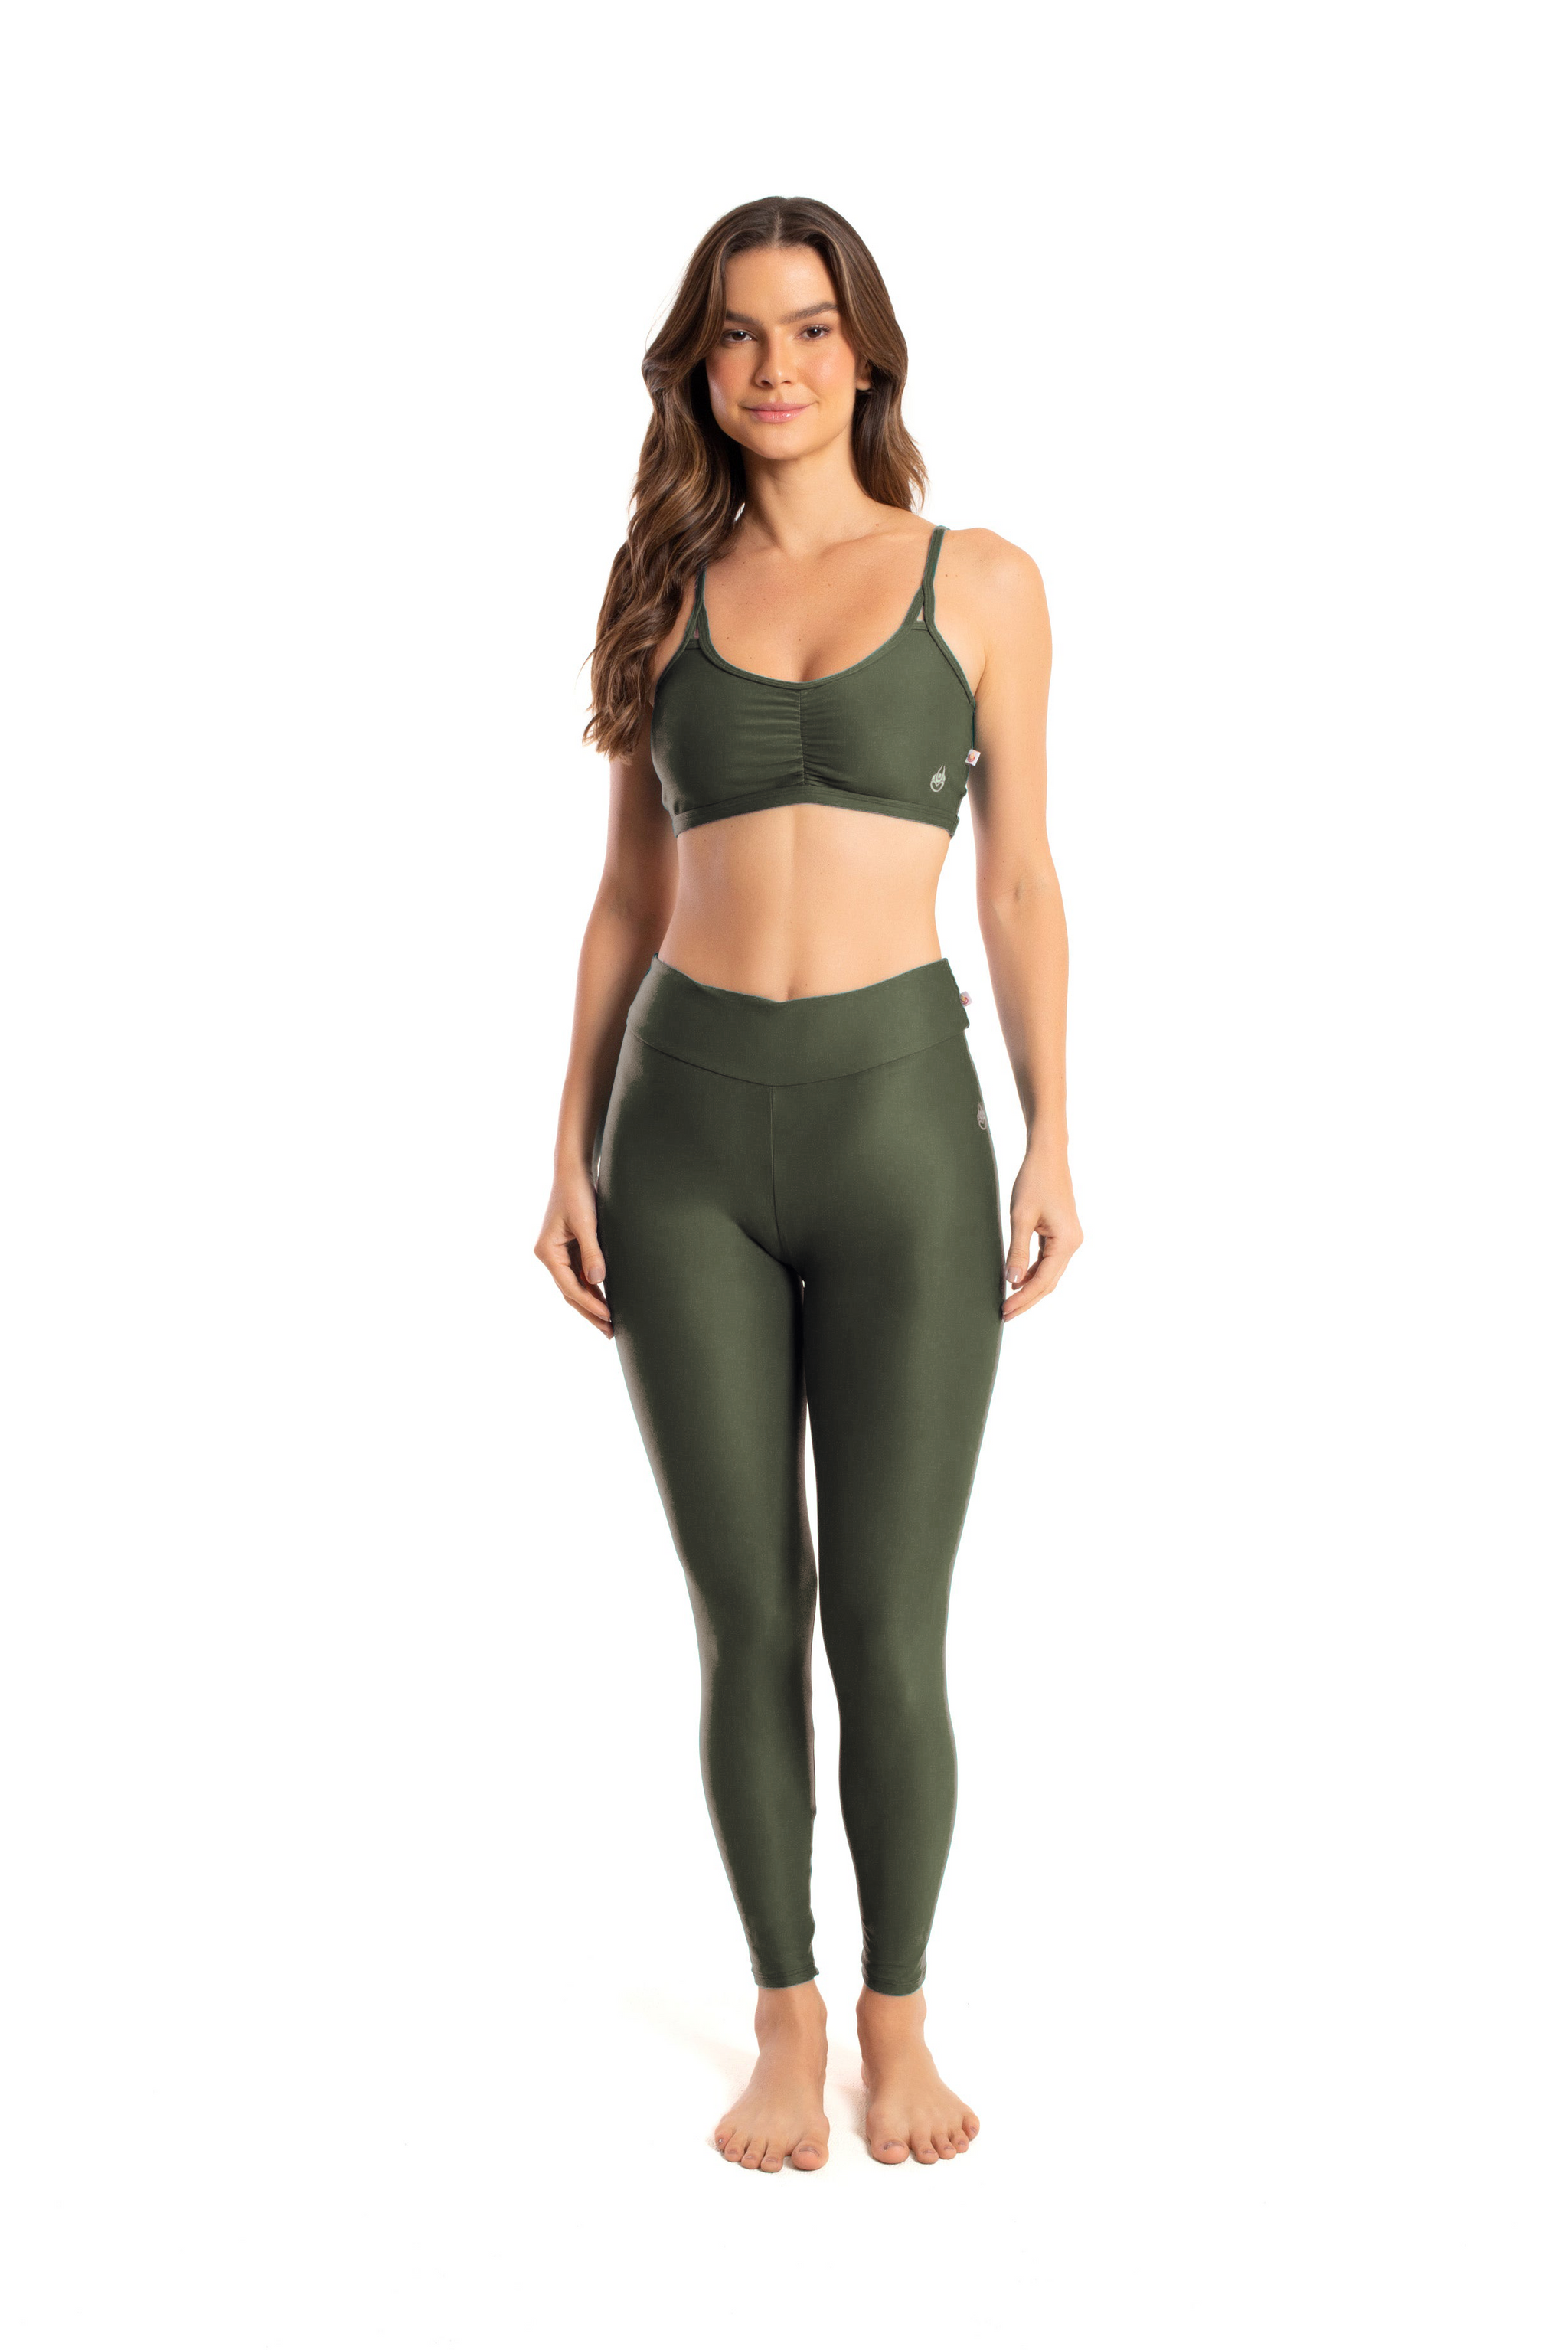 OMKAGI Scrunch Butt Workout Leggings for Women High Waisted Tummy Control  Yoga Gym Pants(L,1158-Army Green)